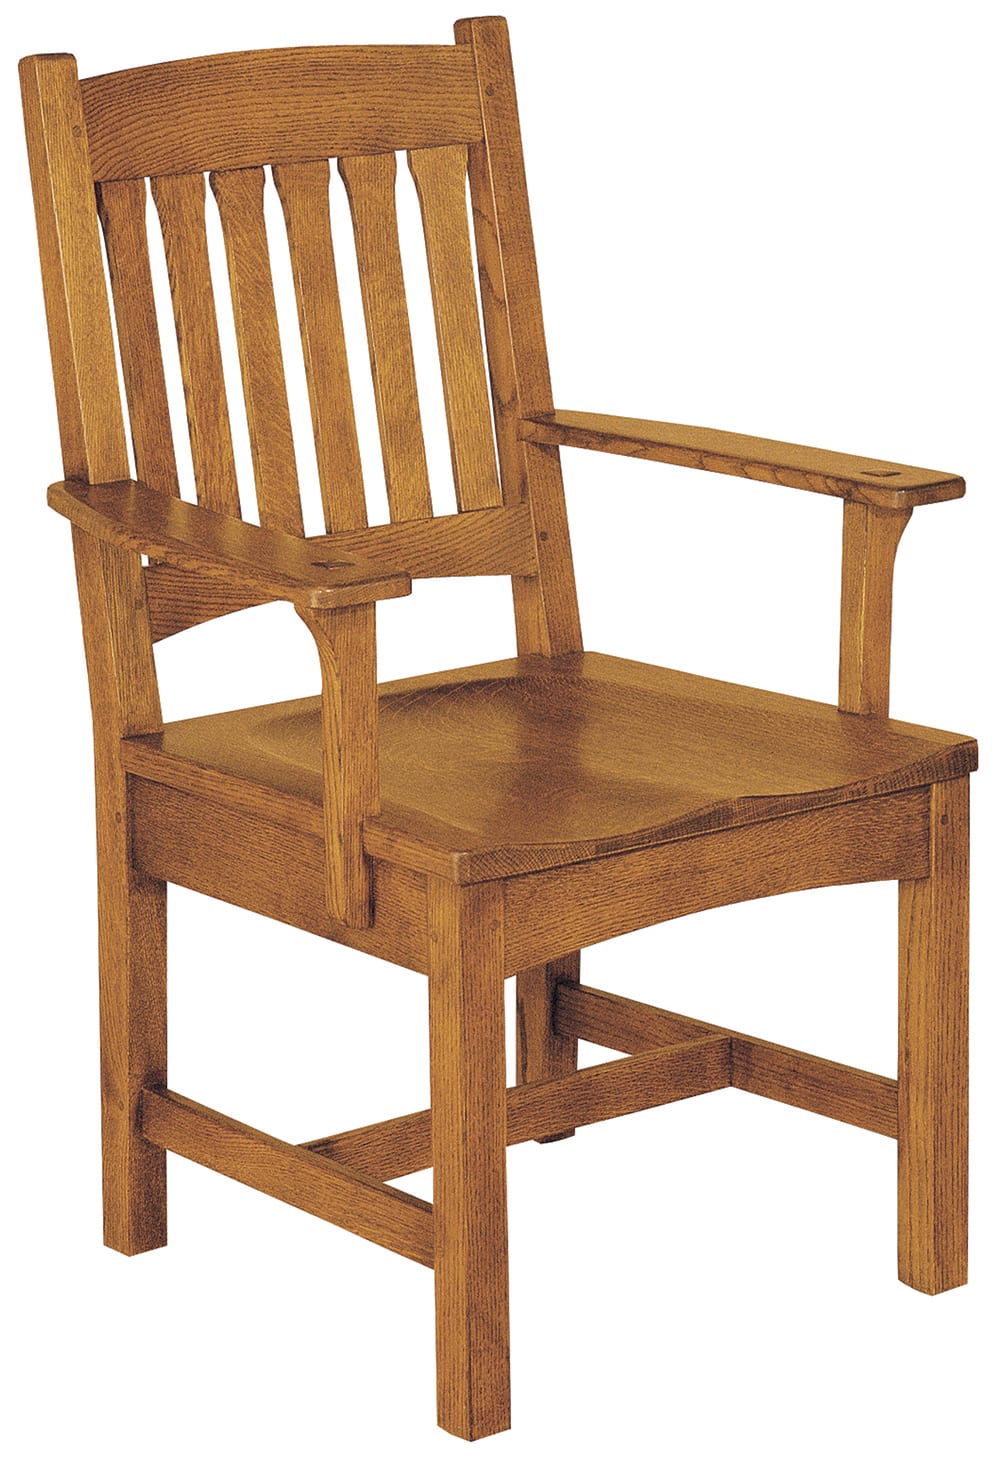 Cottage Arm Chair - Wood - Stickley Brand